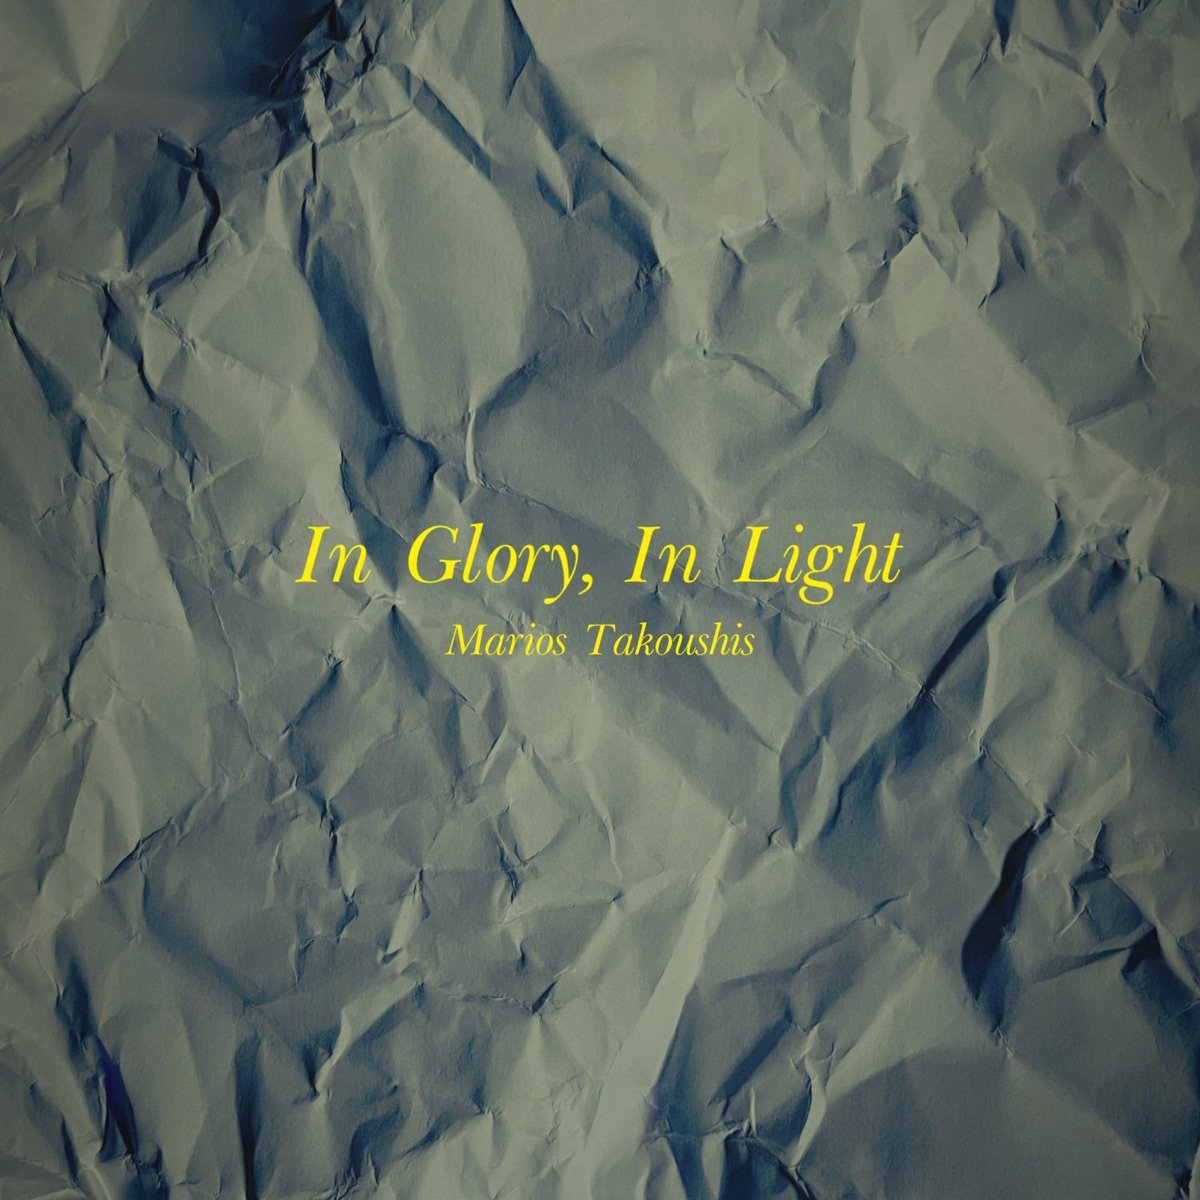 "In Glory, In Light"